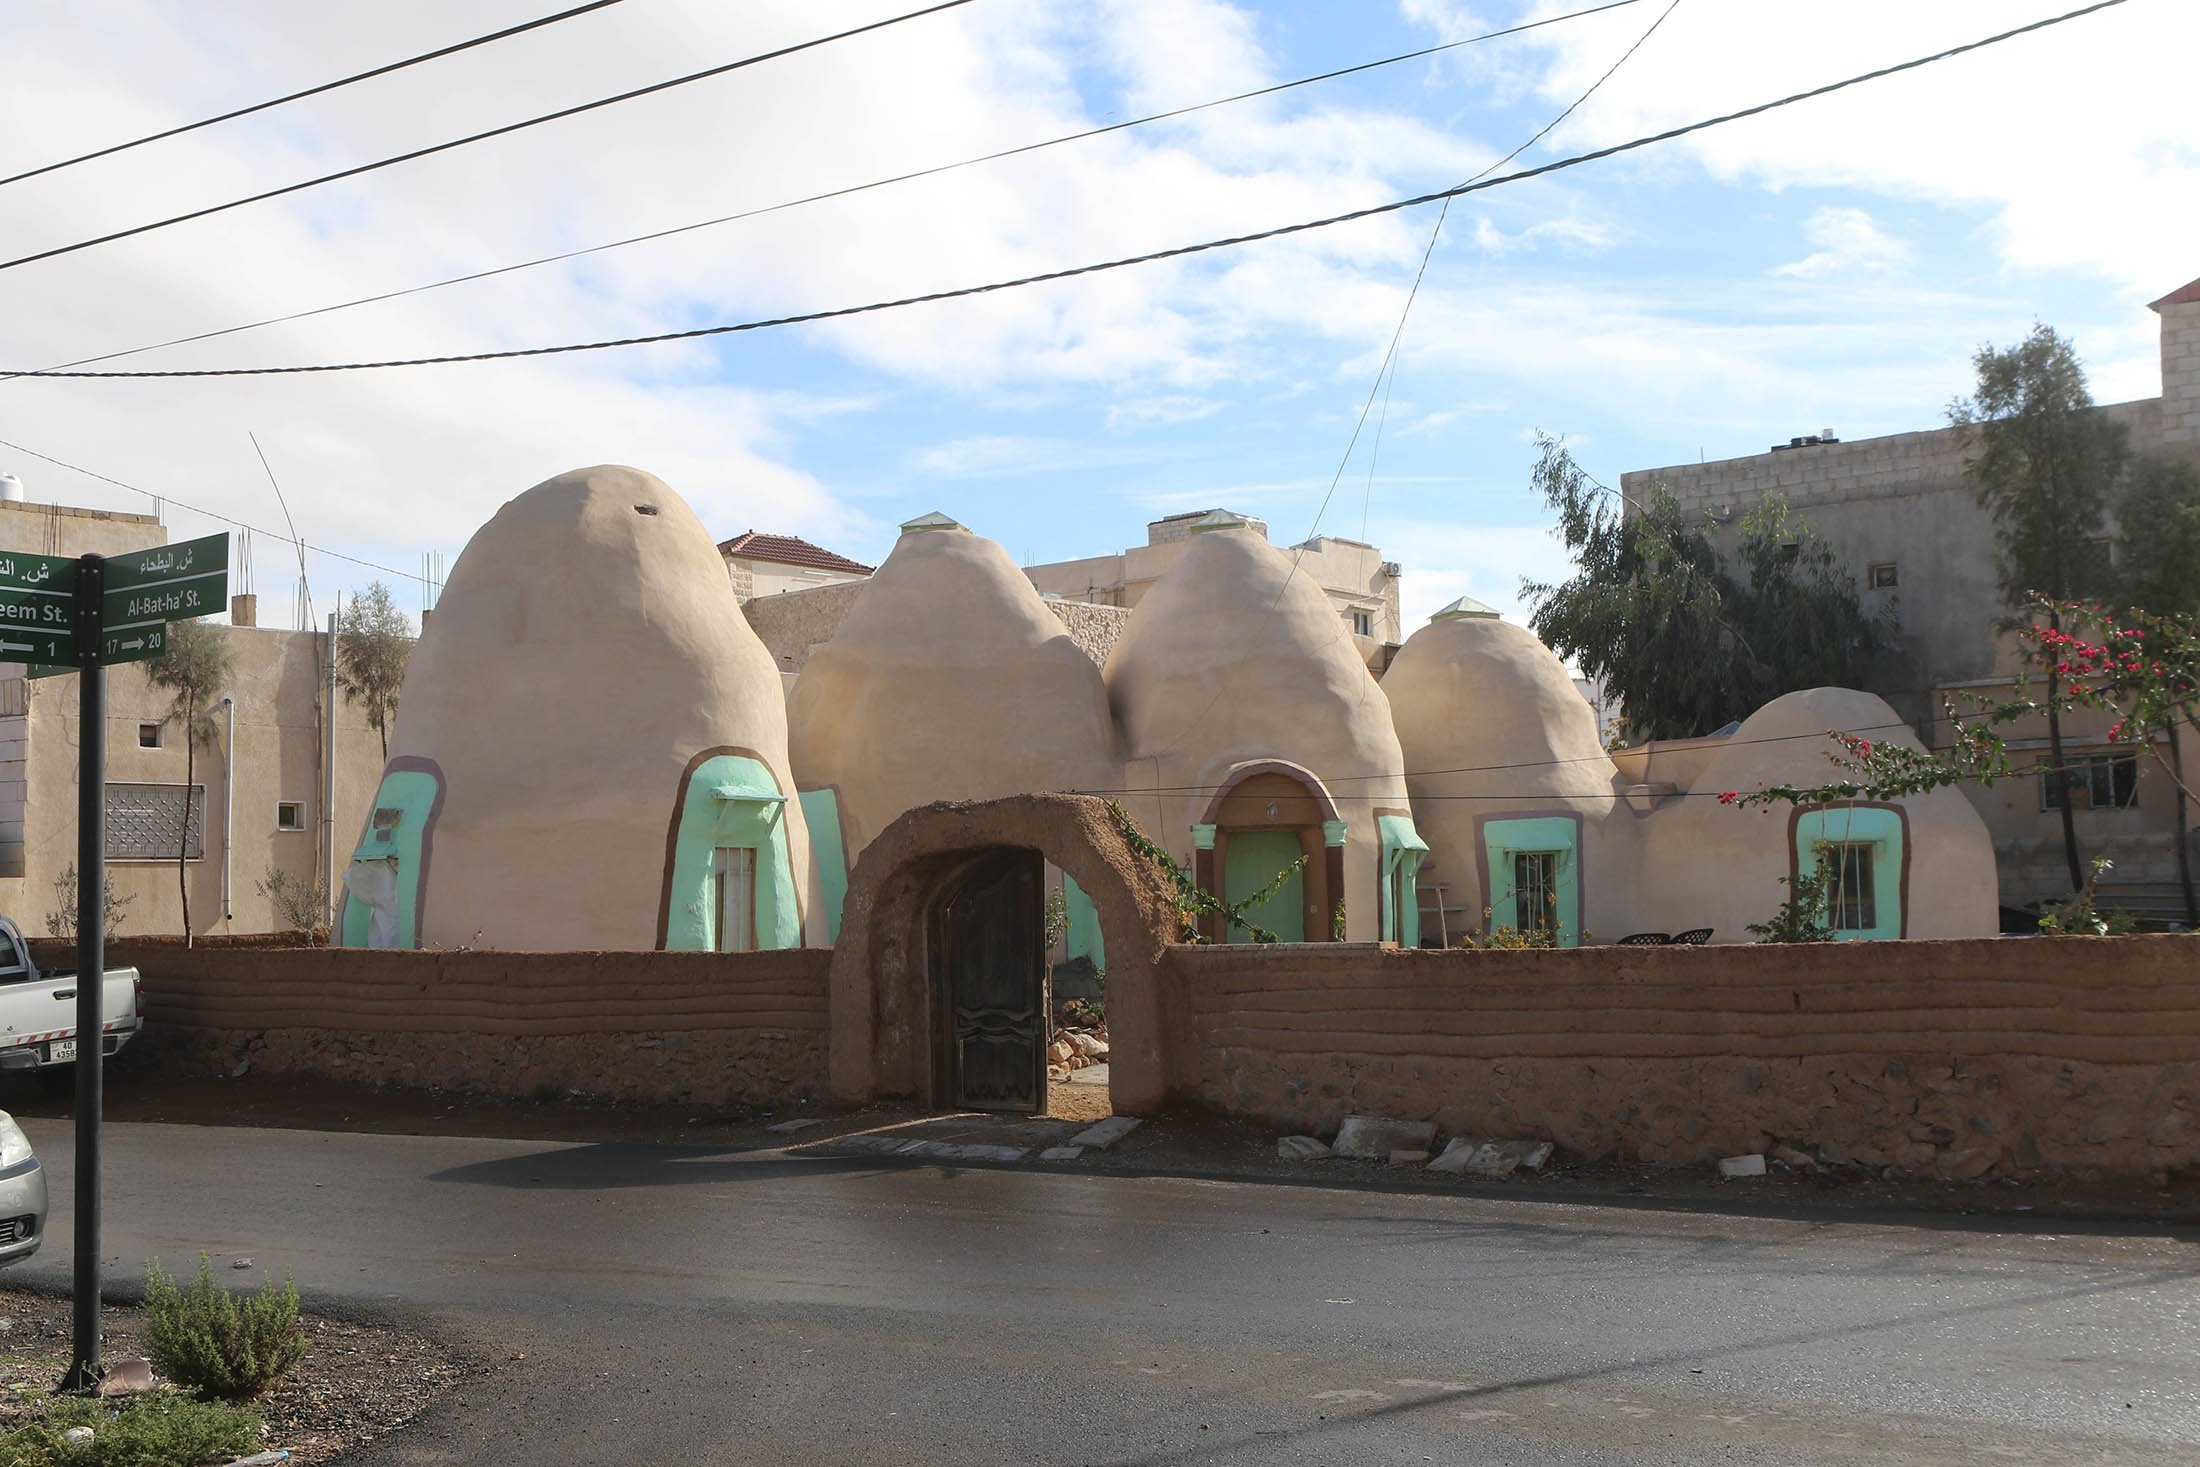 Hamed Yusuf Nazzal's house in Al-Mafraq, Jordan, Jan. 6, 2022. (AA Photo)